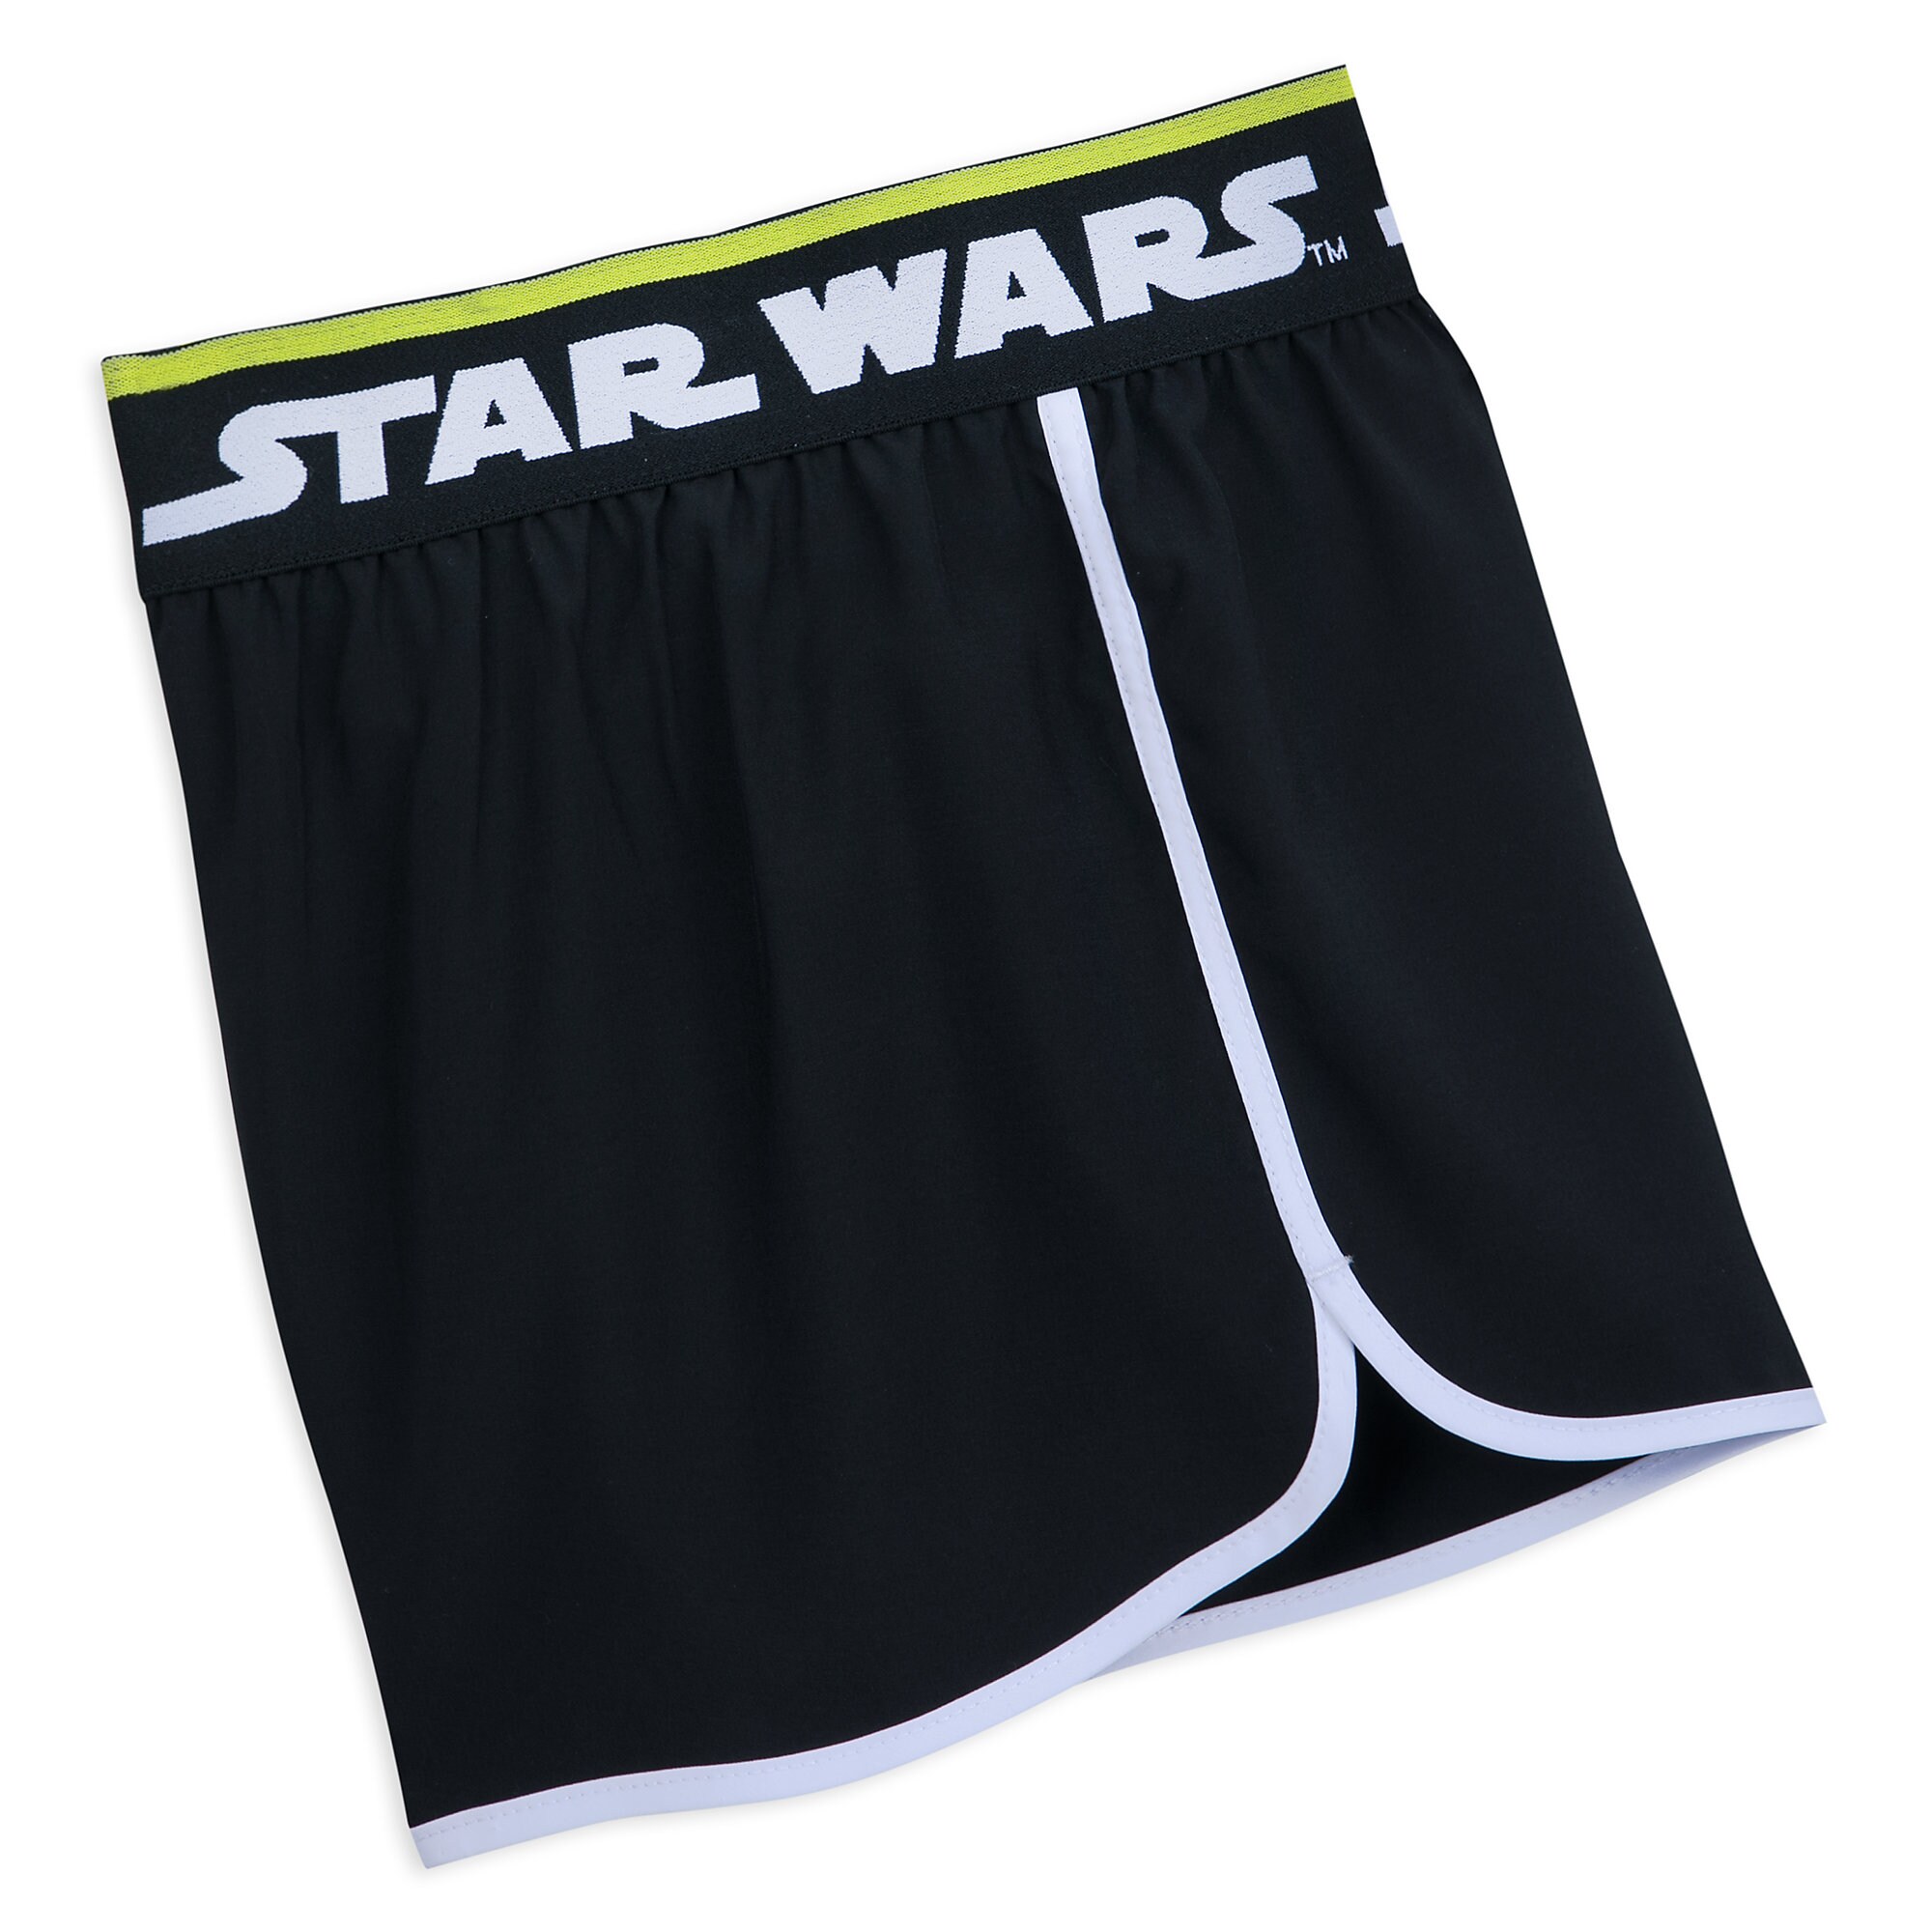 Star Wars Shorts for Women